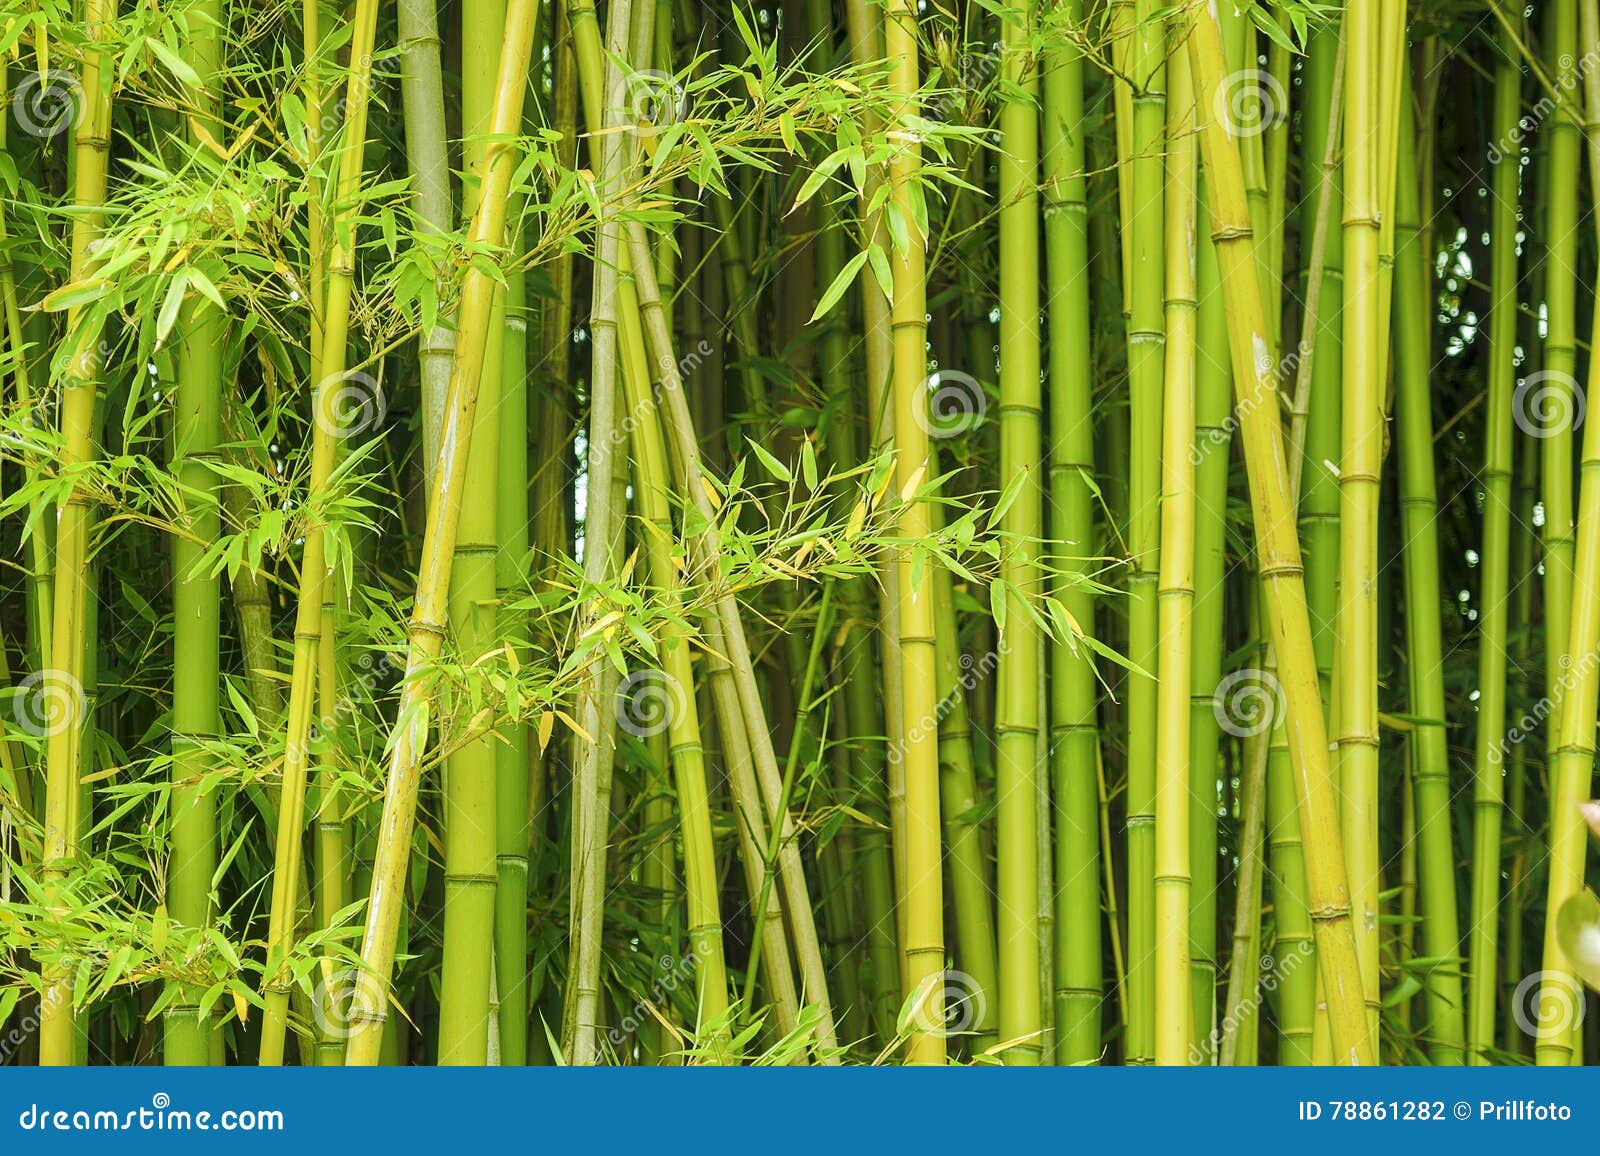 За сколько часов вырастает бамбук. Бамбук зеленый 18-23мм..